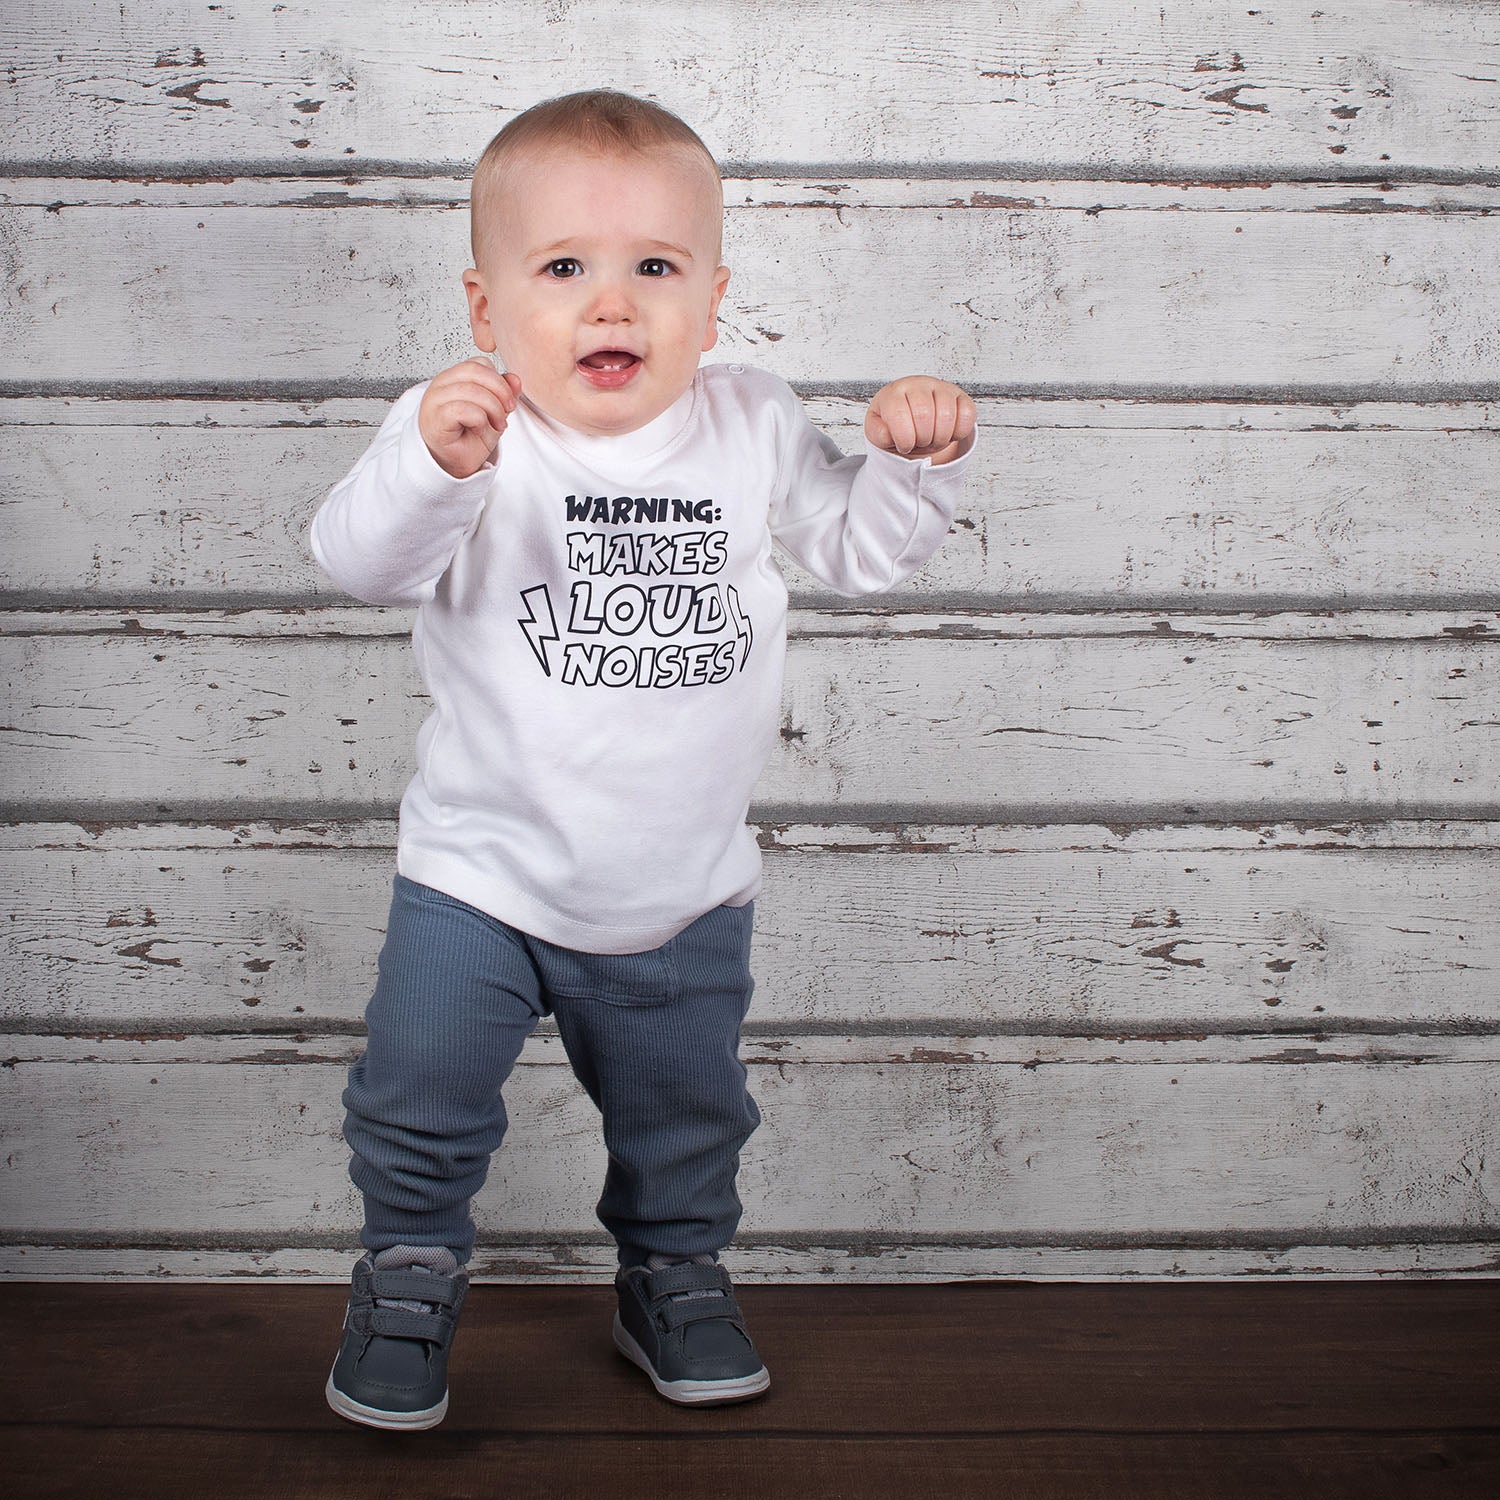 'Warning: makes loud noises' baby longsleeve shirt